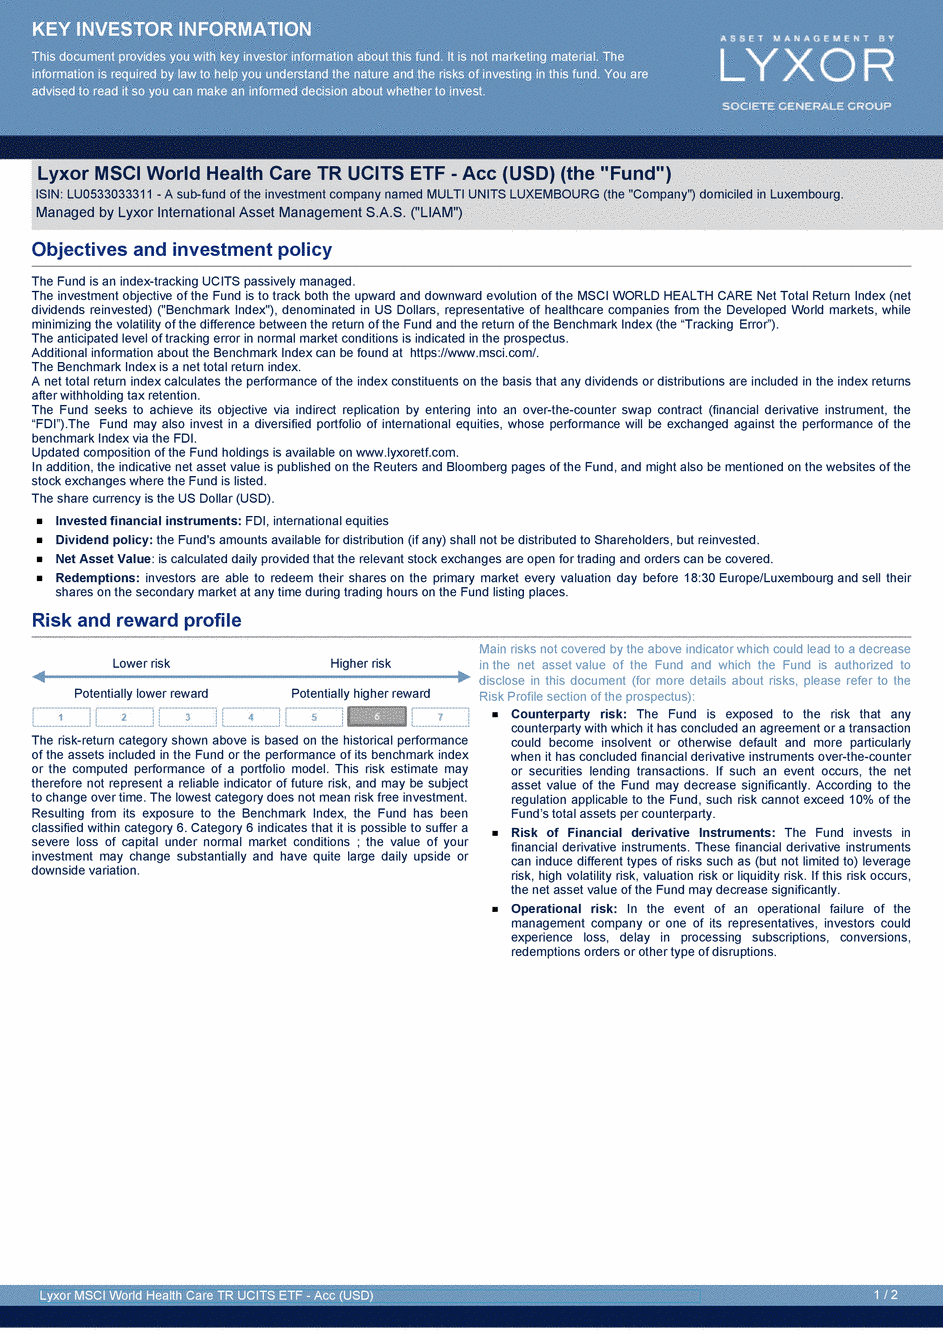 DICI Lyxor MSCI World Health Care TR UCITS ETF - Acc (USD) - 19/02/2021 - Anglais